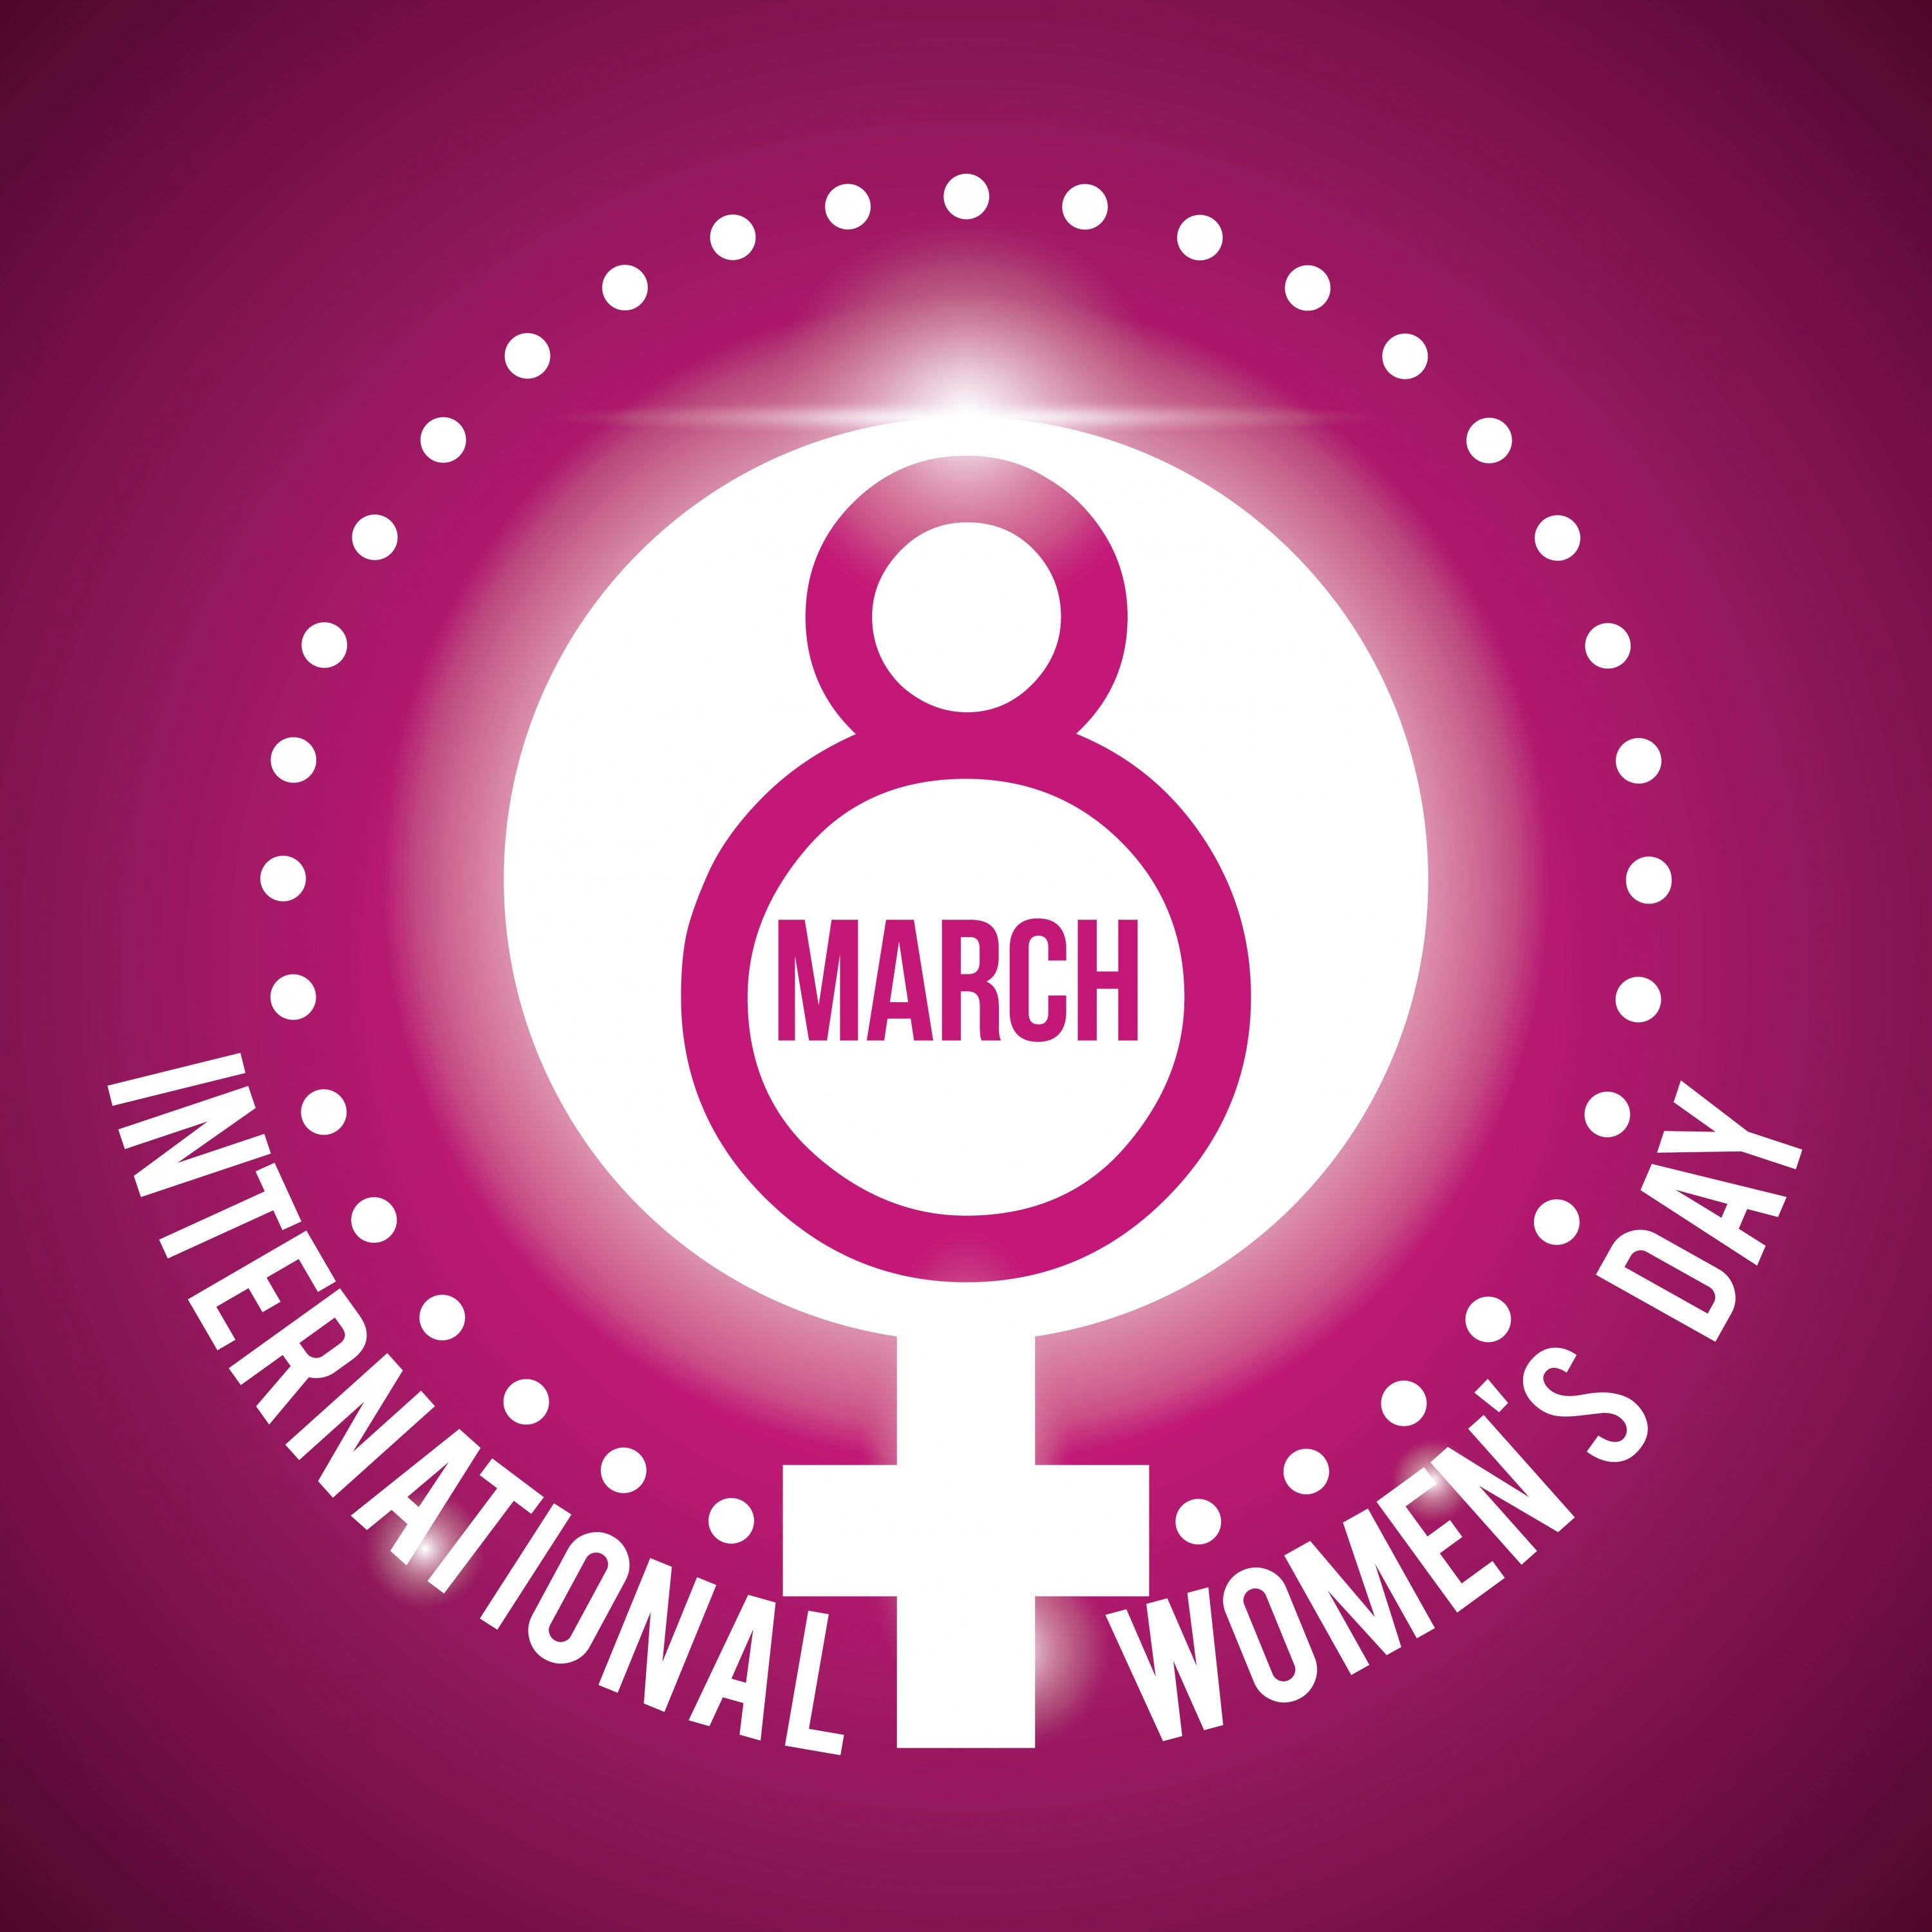 International women's day logo